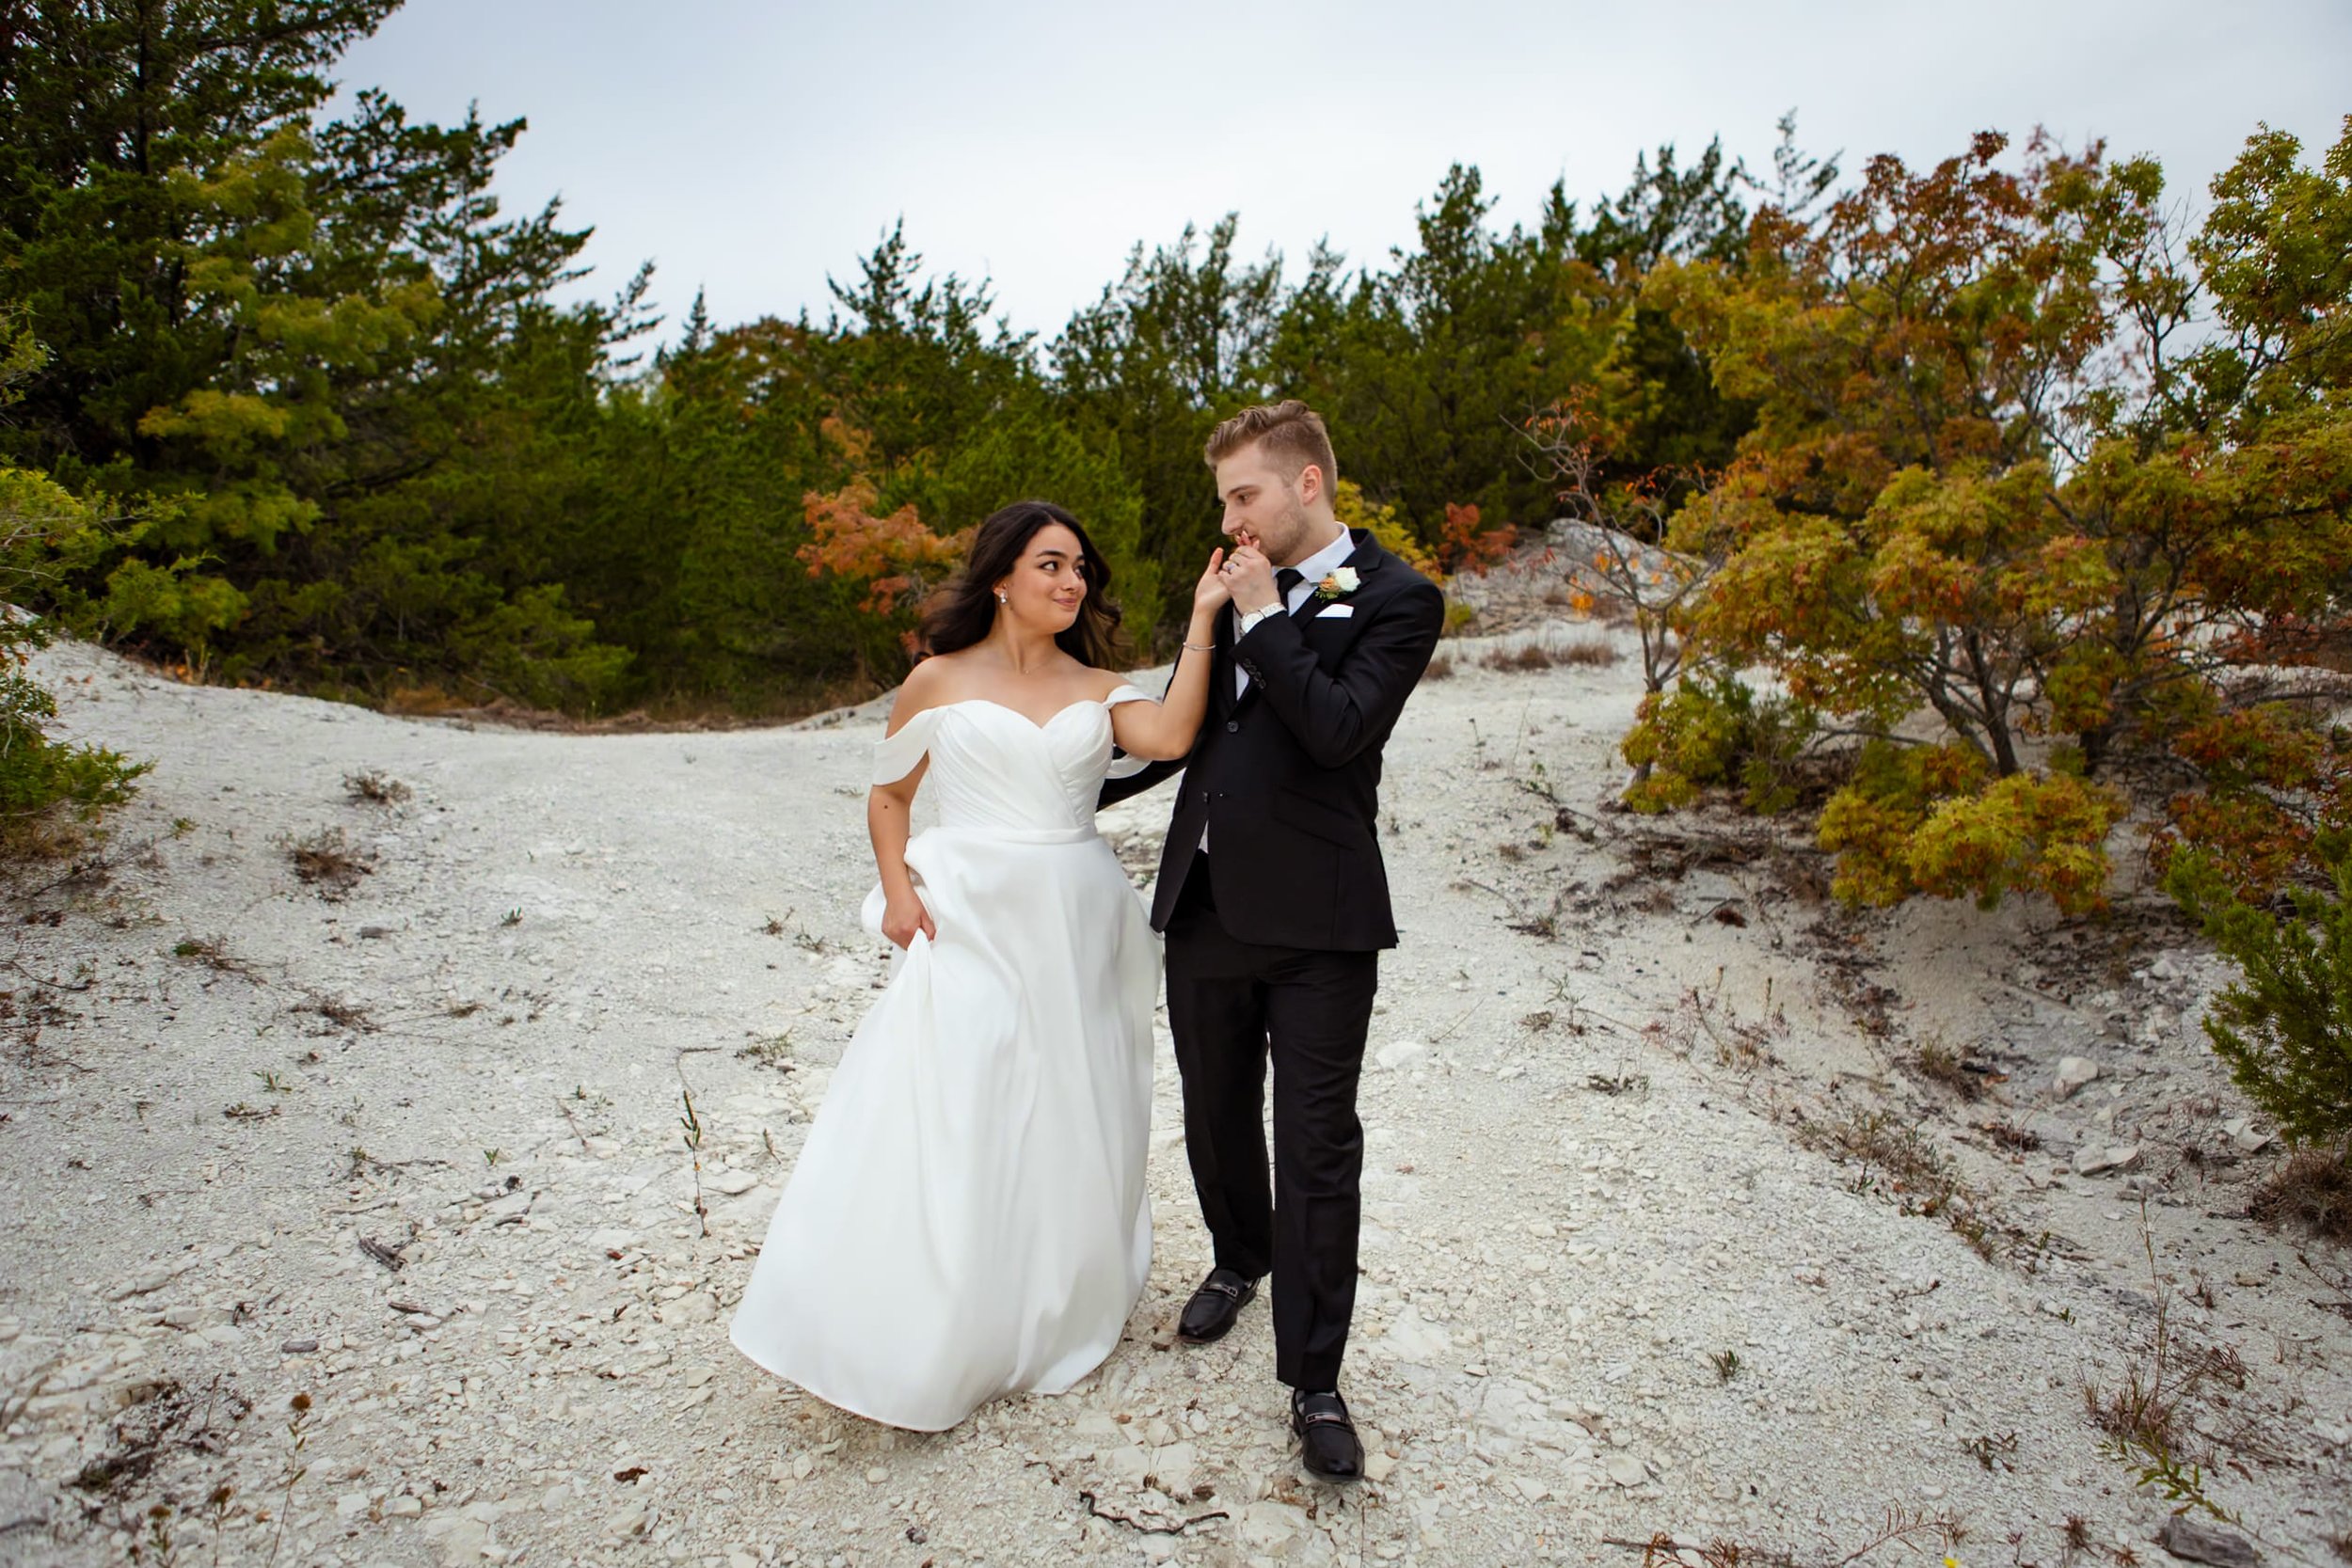 Mckinney Texas wedding bride and groom photo walking together kissing hand